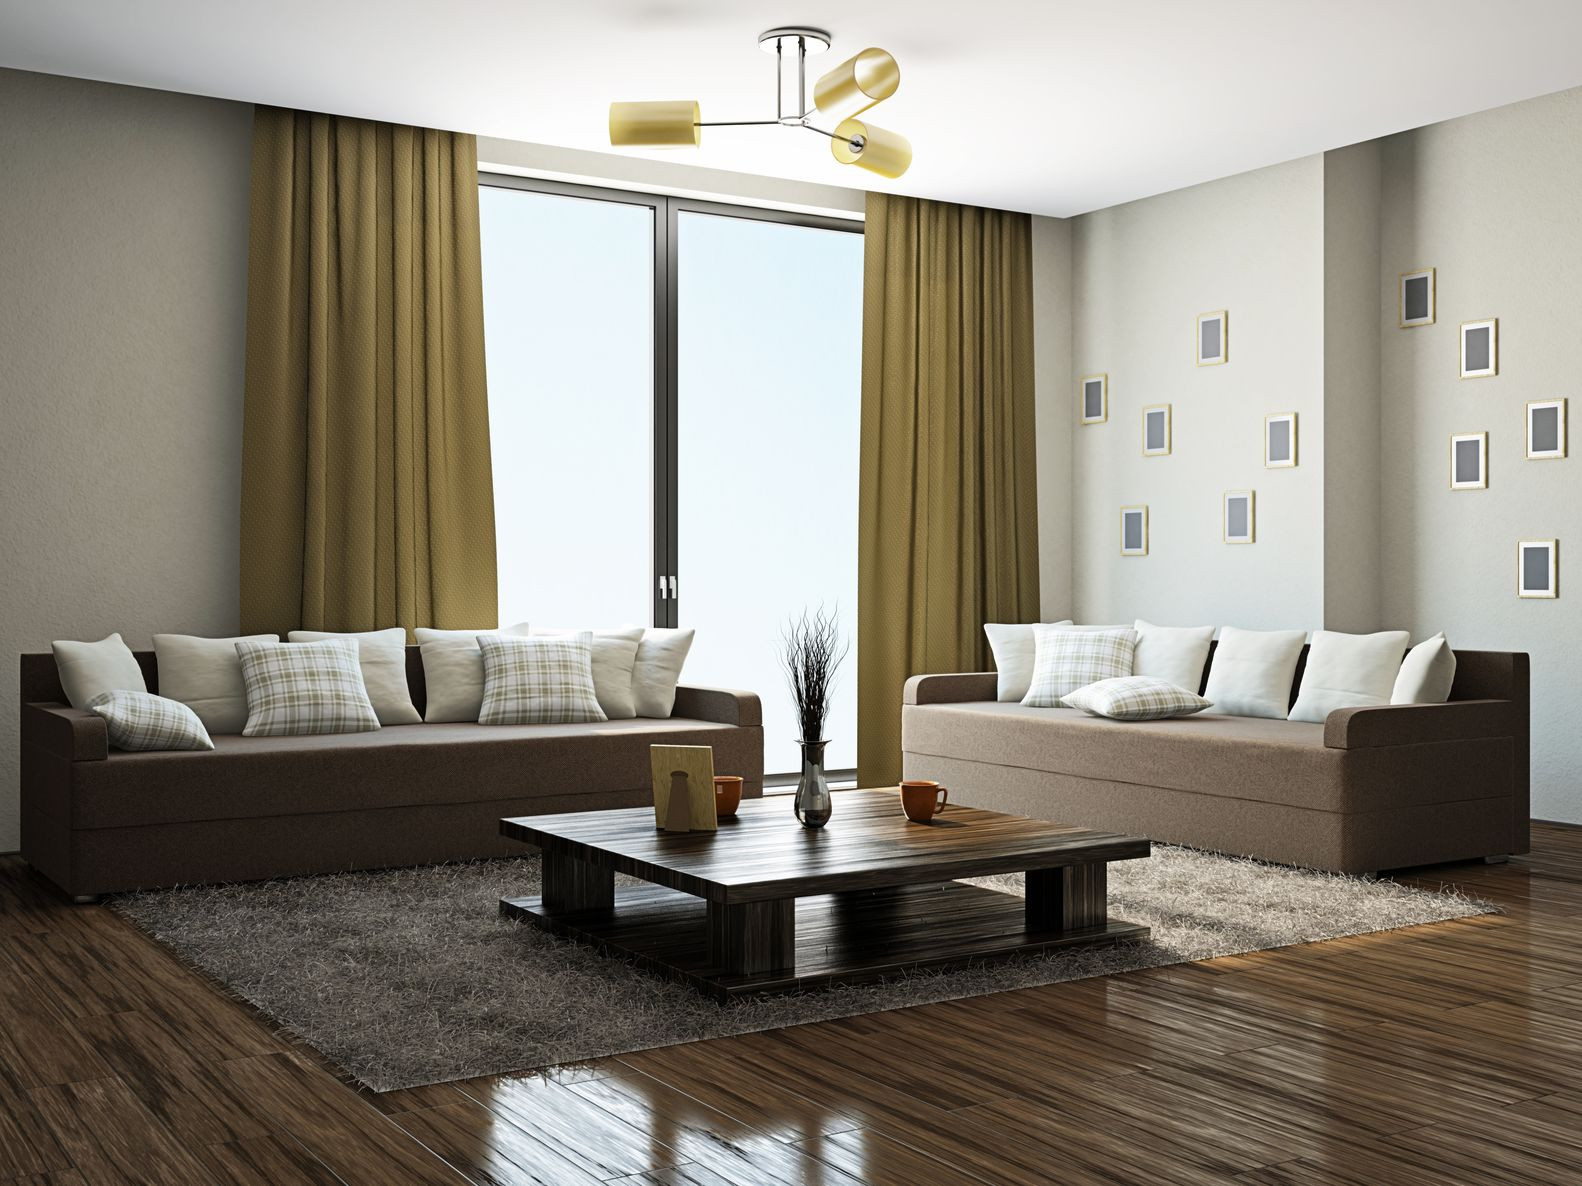 Modern Valances For Living Room
 Awesome Living Room Curtains Designs Amaza Design